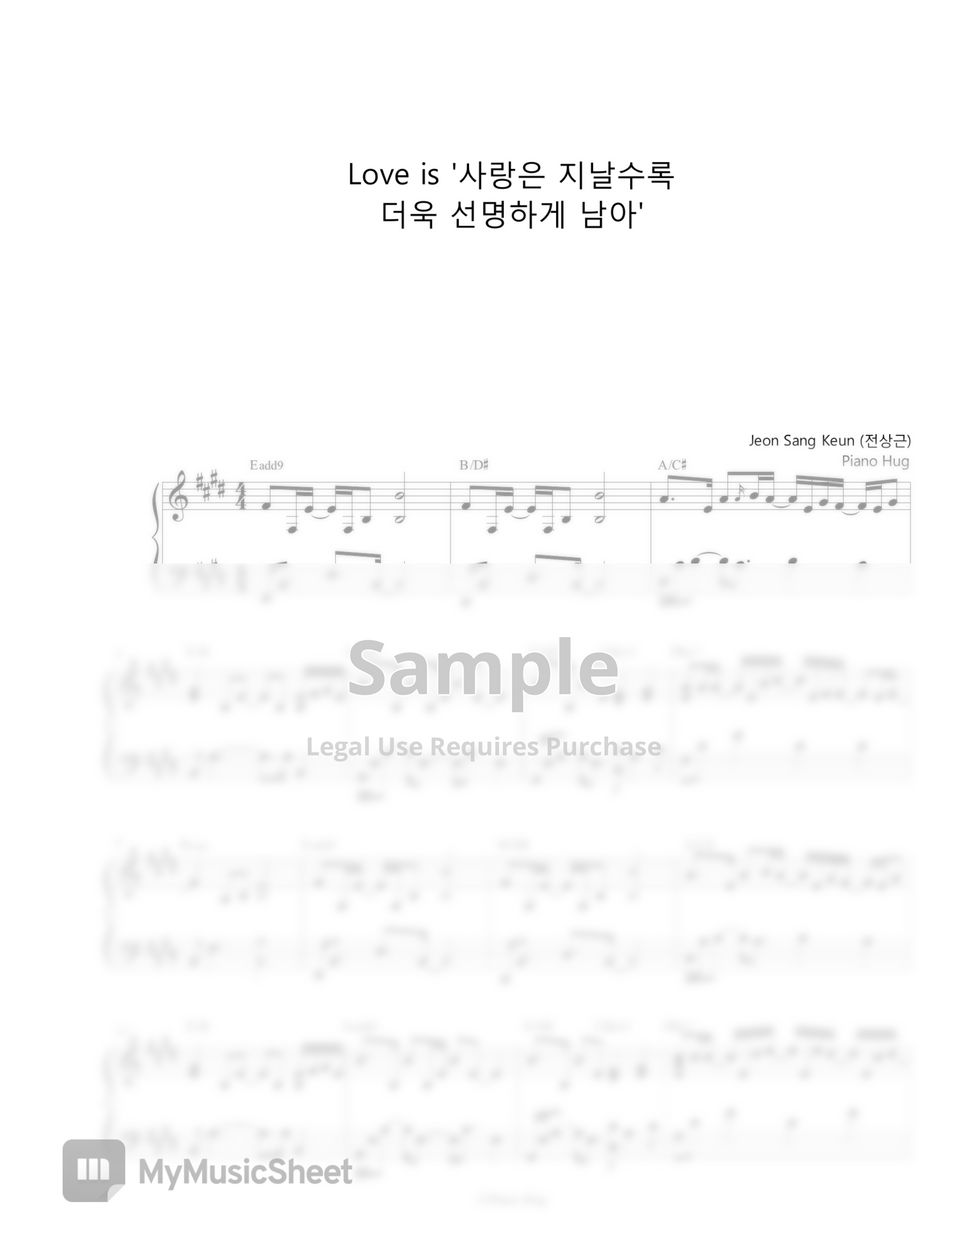 Jeon Sang Keun (전상근) - Love is '사랑은 지날수록 더욱 선명하게 남아' by Piano Hug